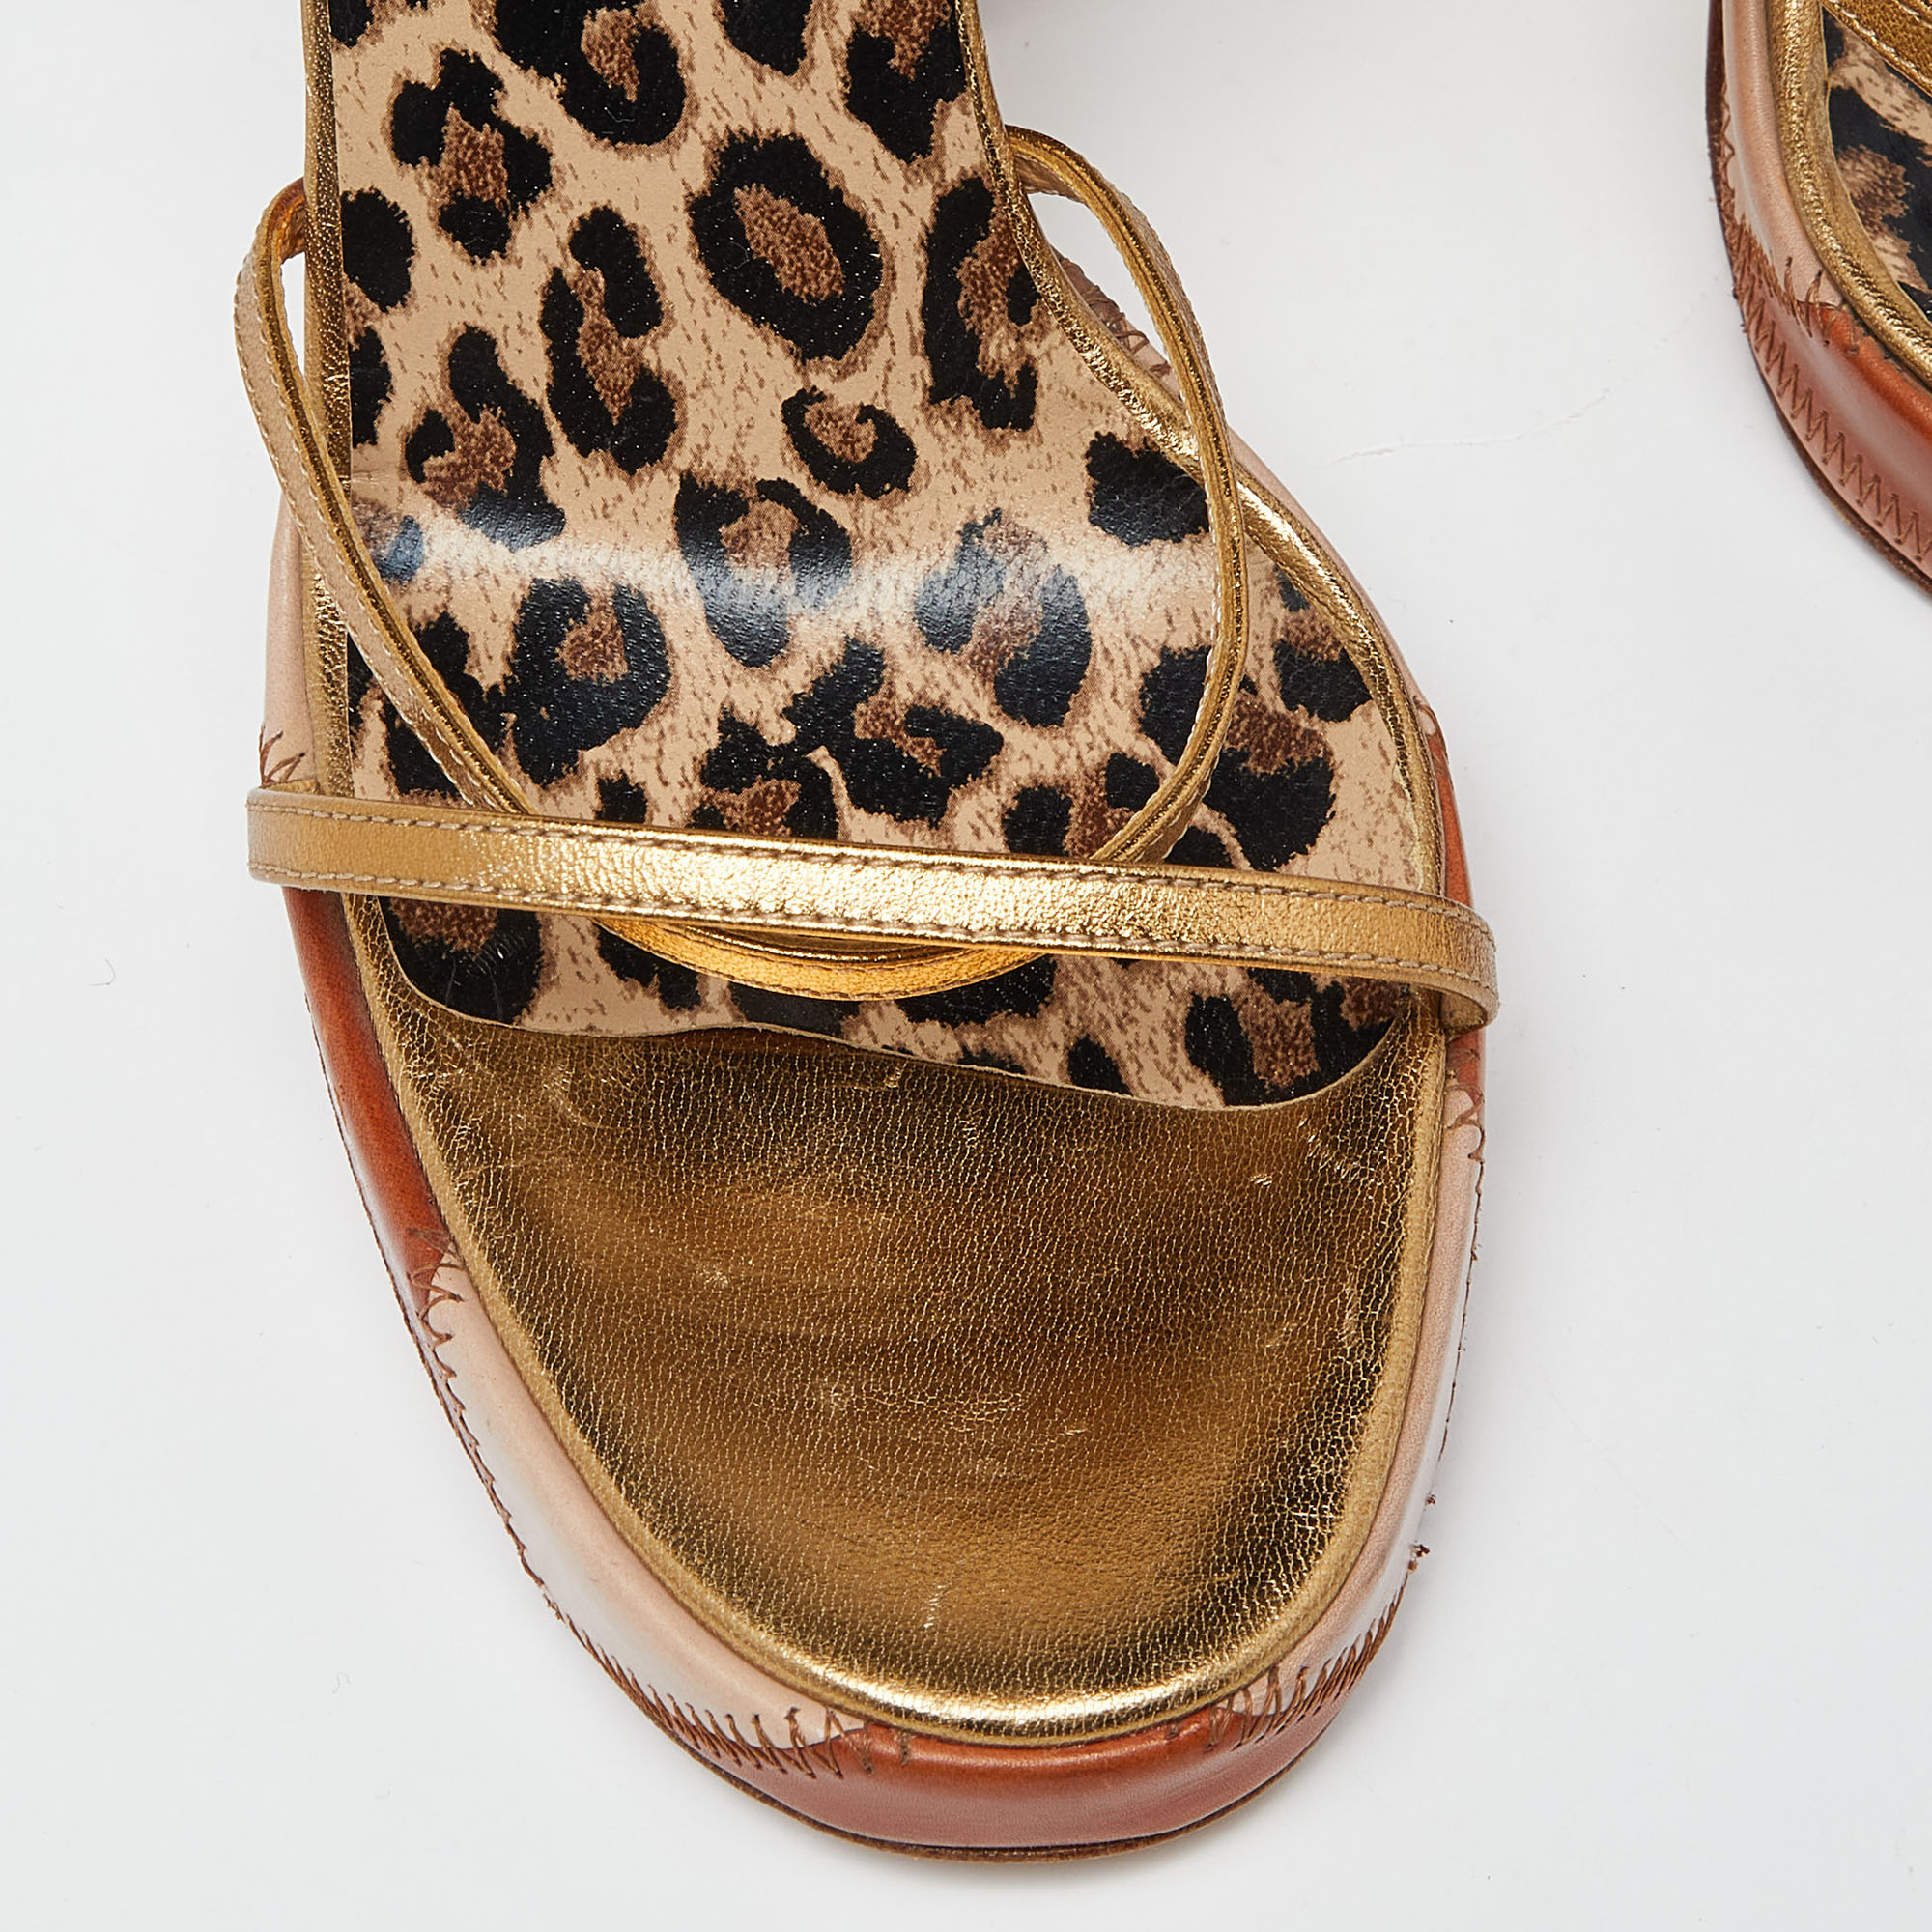 Dolce & Gabbana Gold Leather Platform Ankle Strap Sandals Size 38